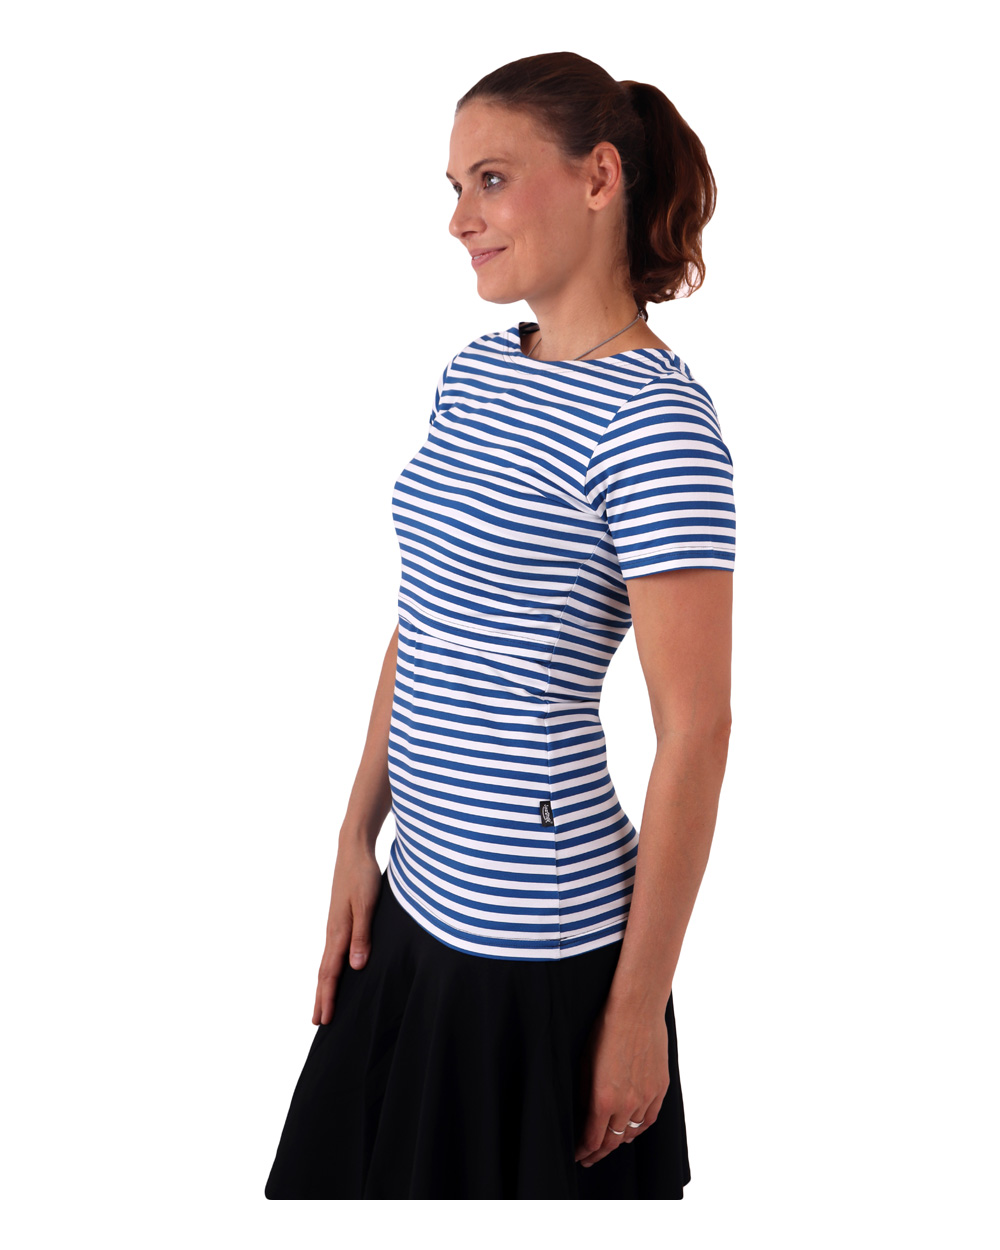 Breast-feeding T-shirt Katerina, short sleeves, blue-white striped